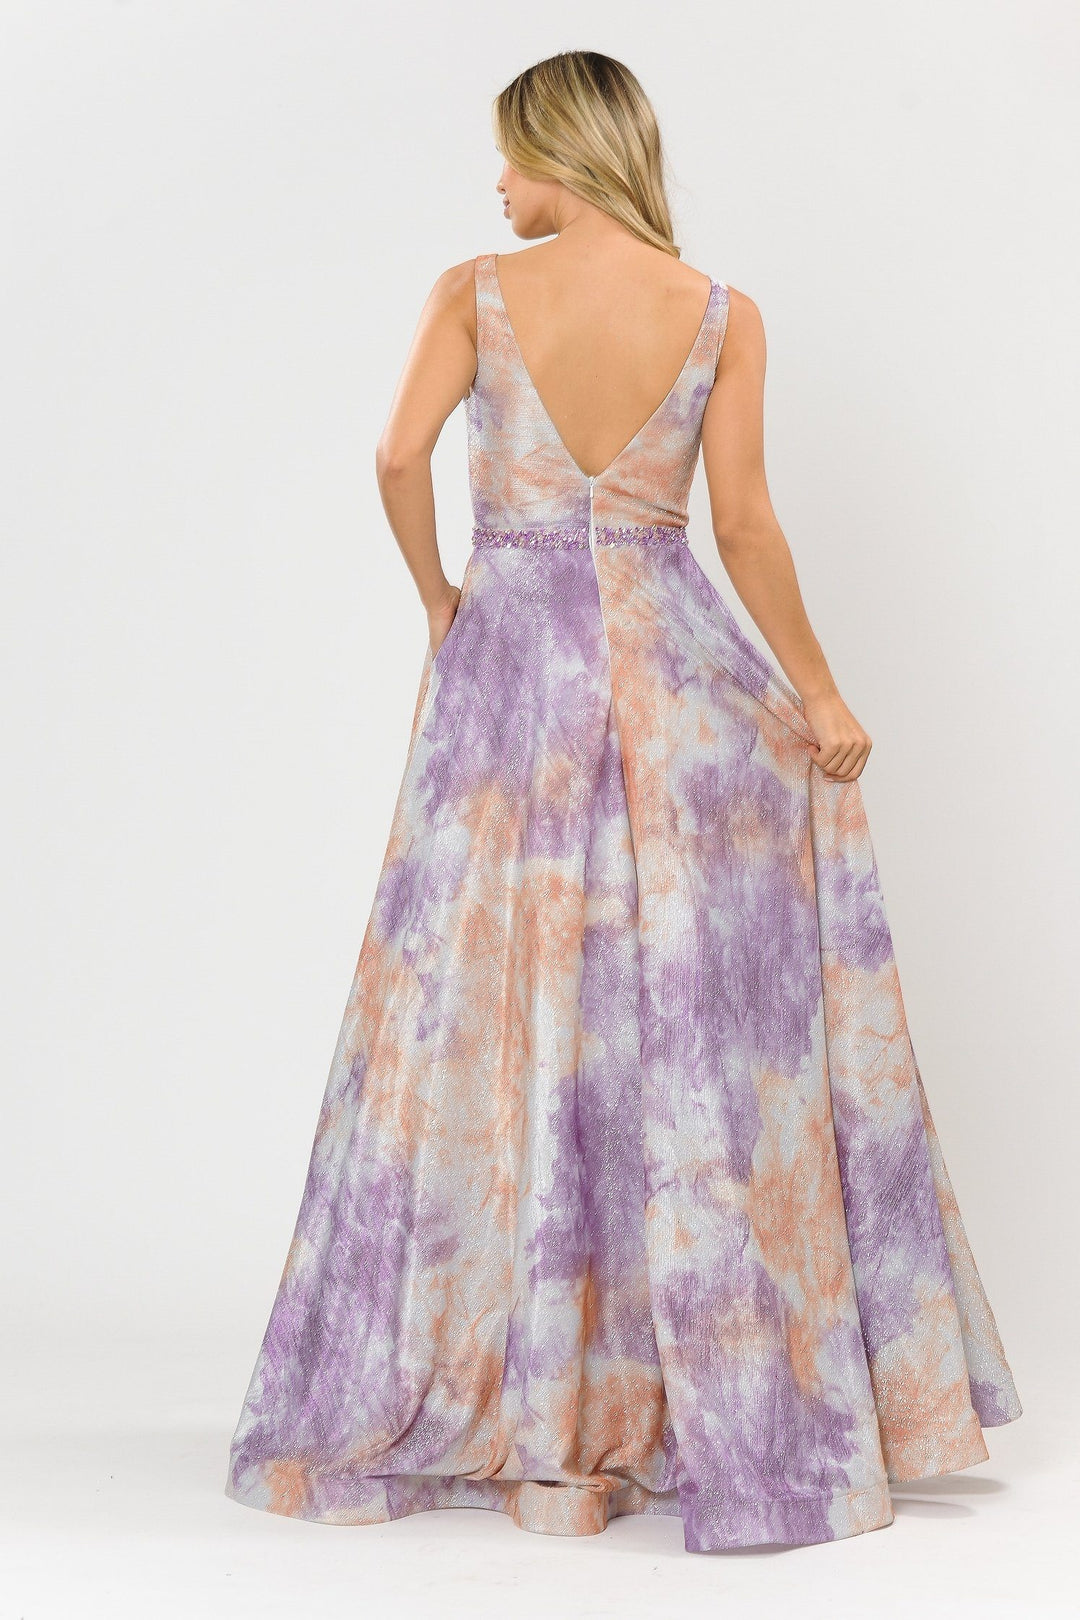 Long A-line Glitter Tie Dye Formal Dress by Poly USA 8346